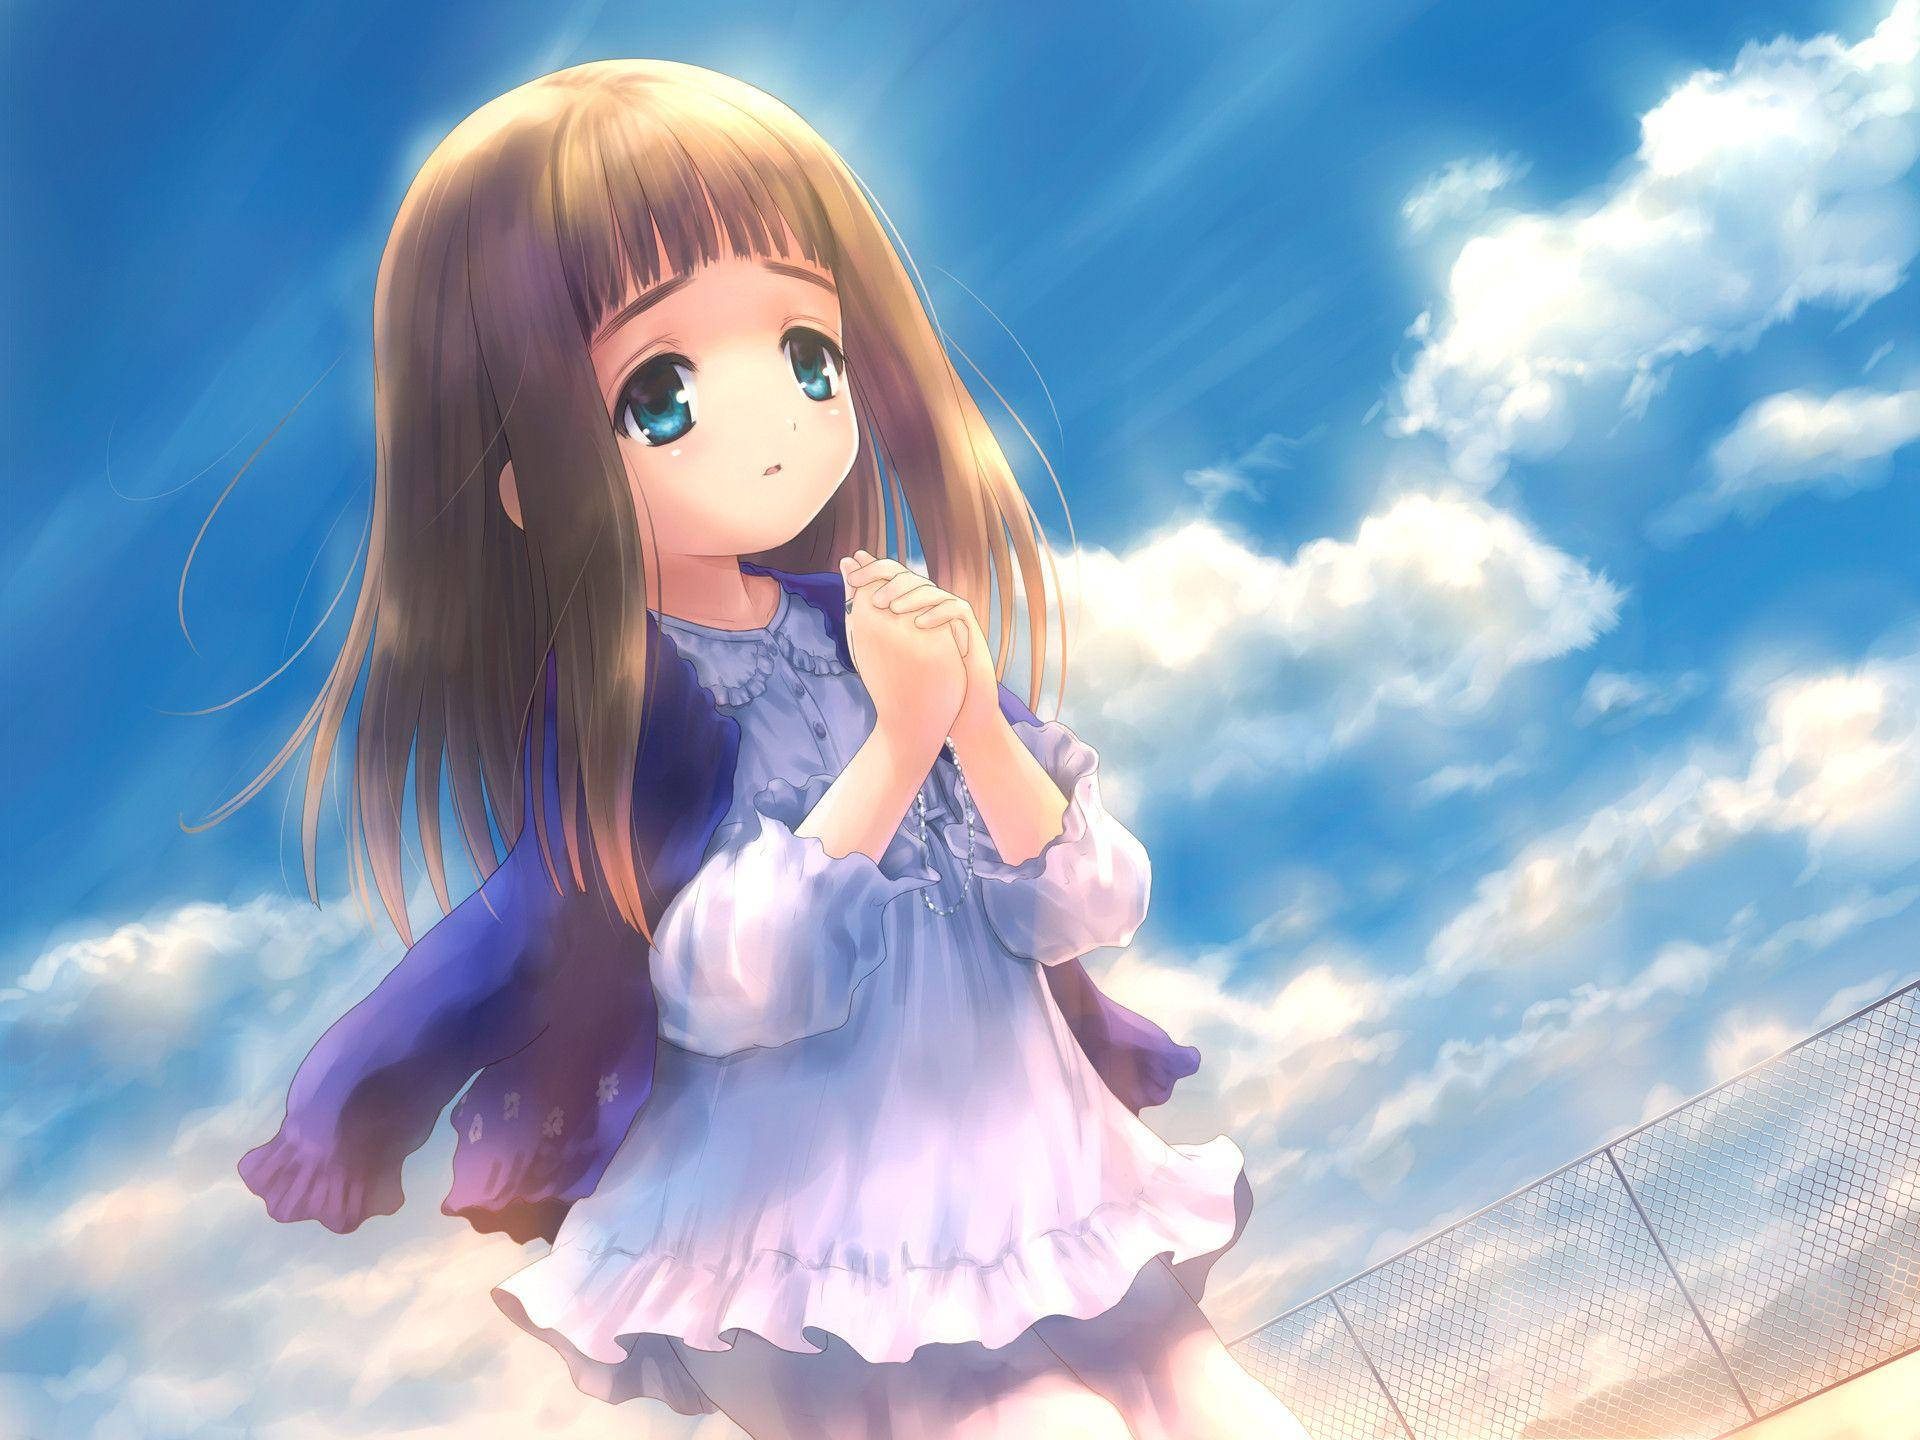 Pray - Anime Girls Wallpapers and Images - Desktop Nexus Groups